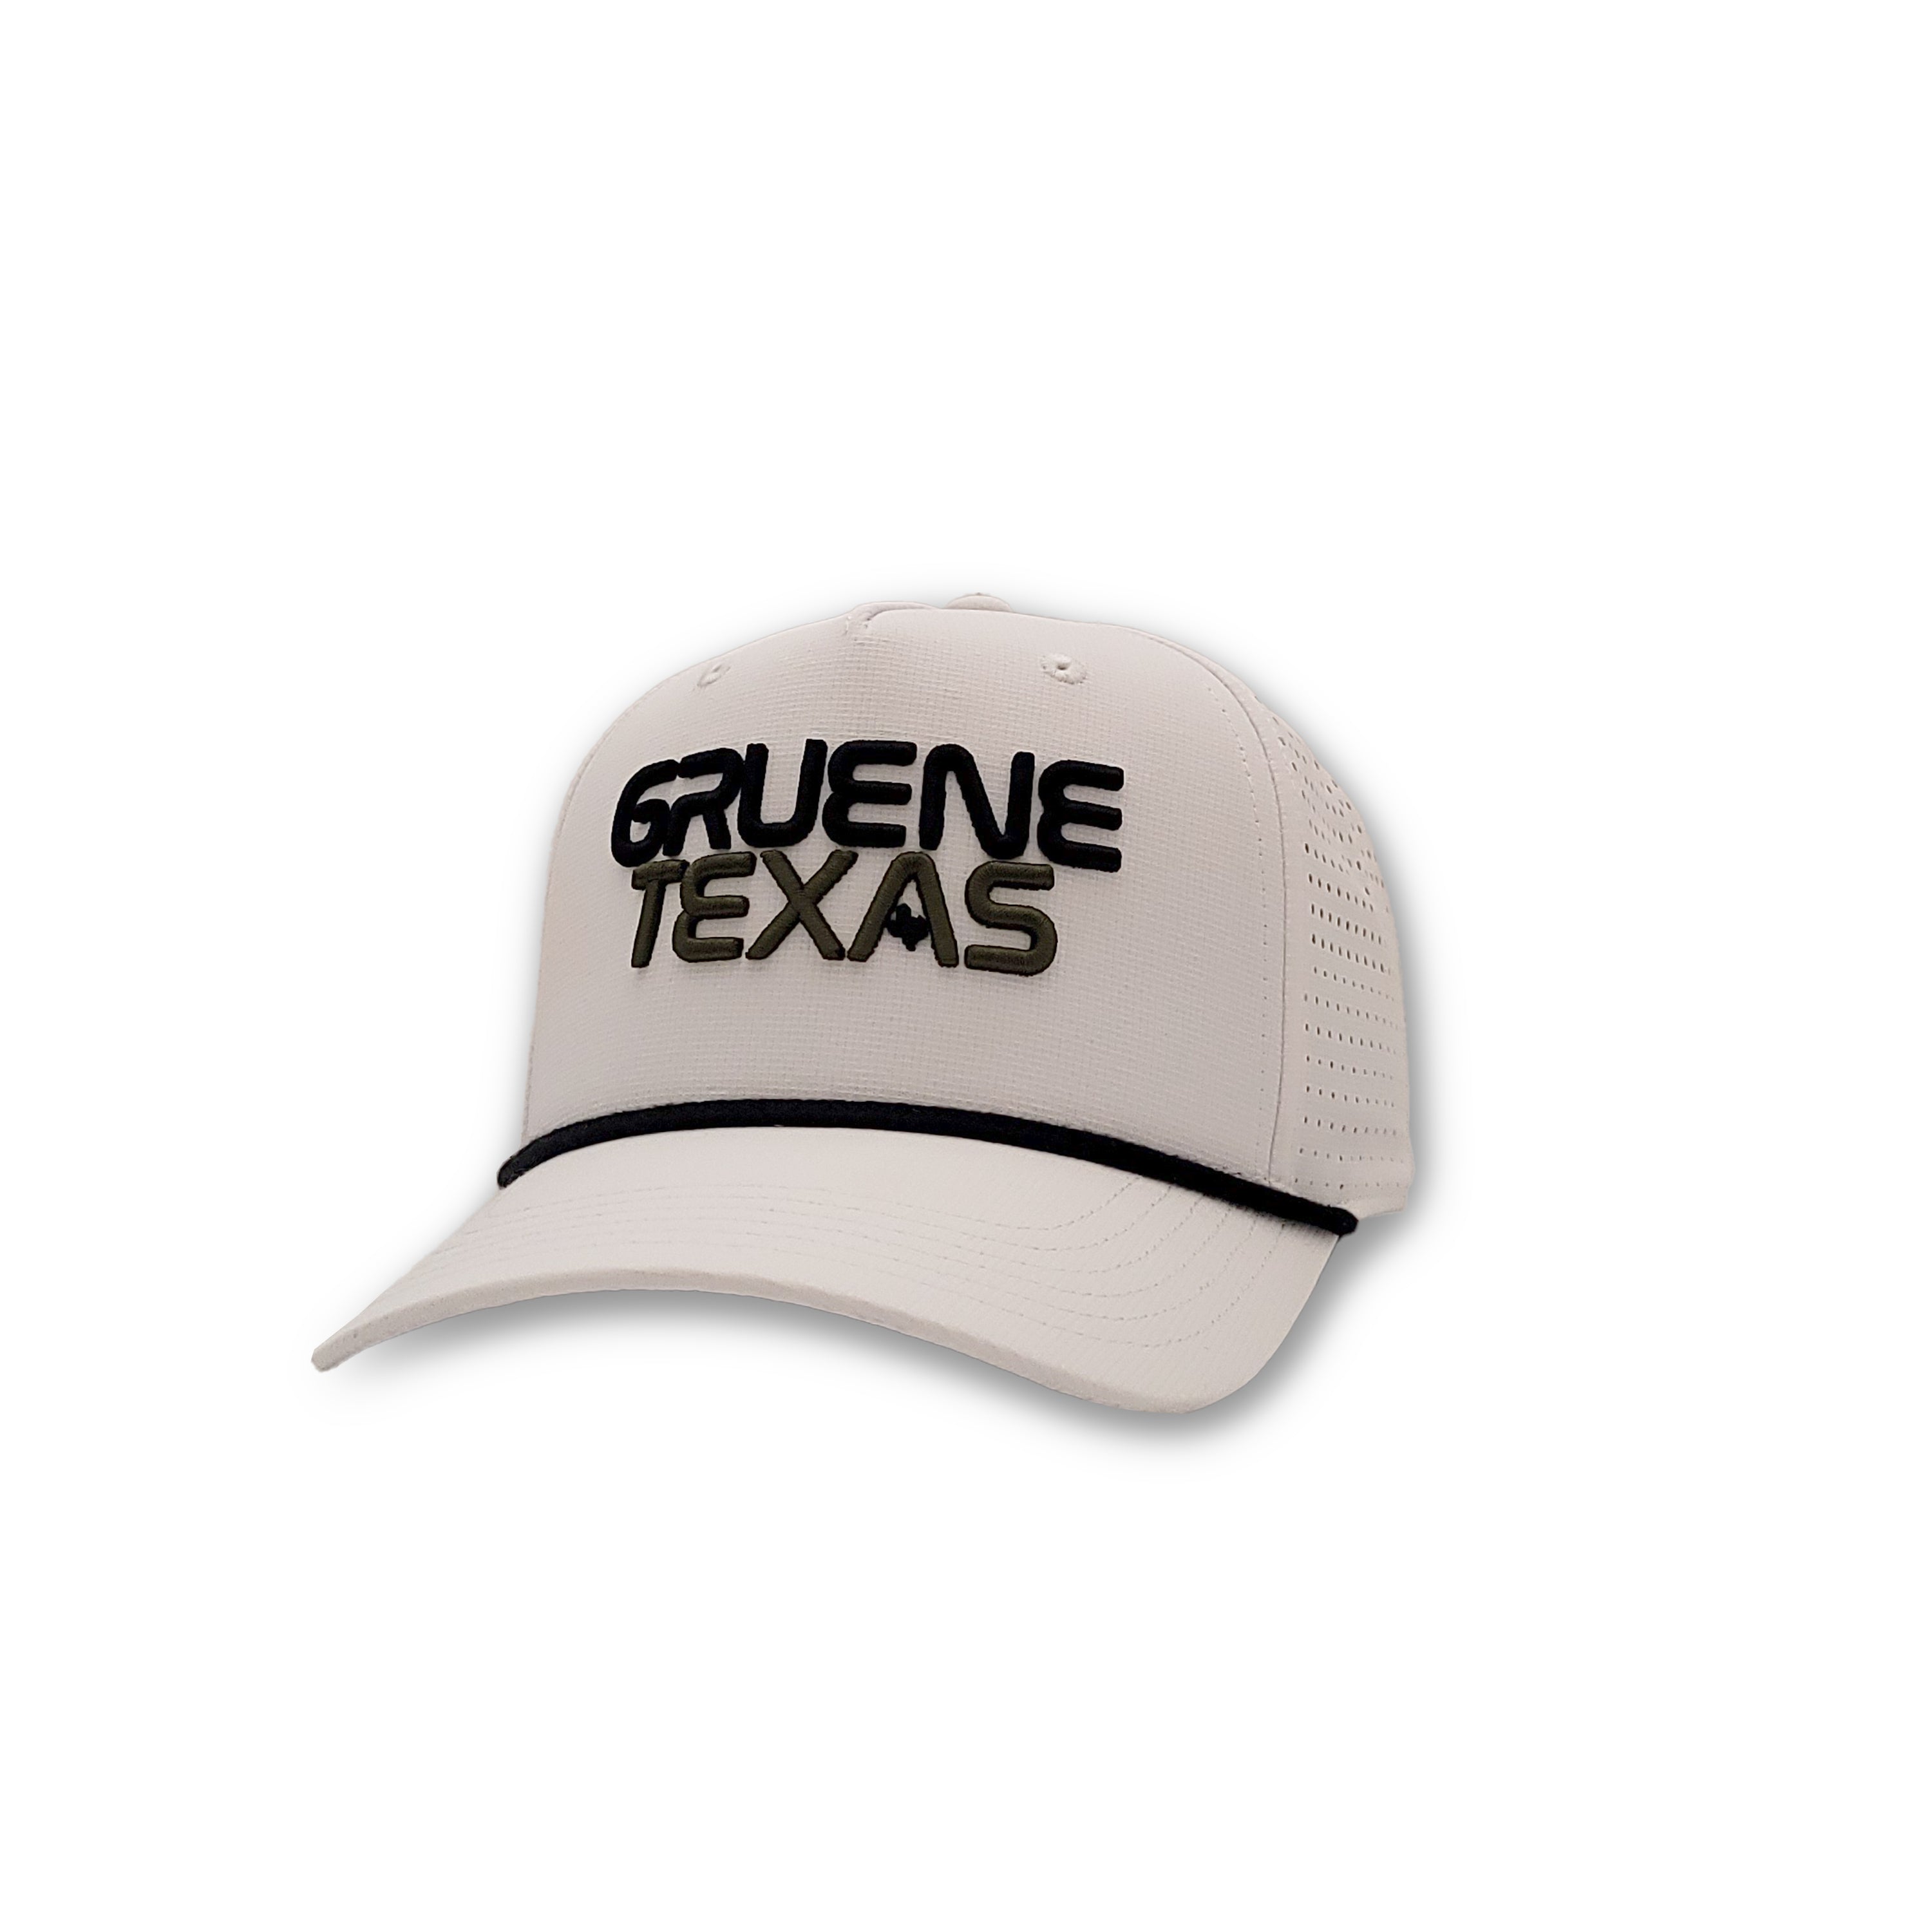 Gruene Texas Perforated Golf Cap #JFI-22030JR WHITE